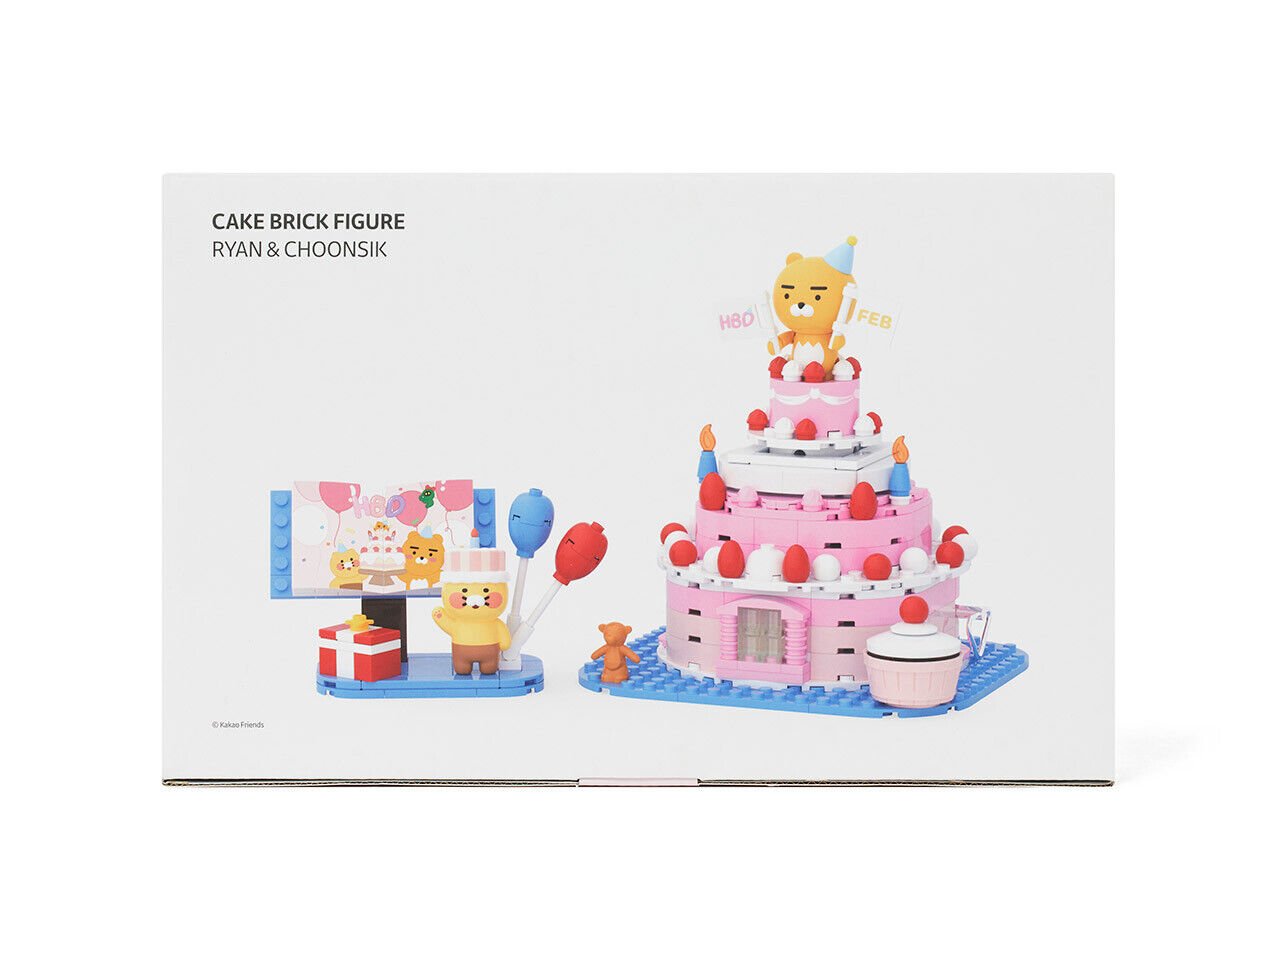 Kakao Friends: Cake Brick Figure - Ryan & Choonsik	라이언 춘식이 케잌 브릭 피규어